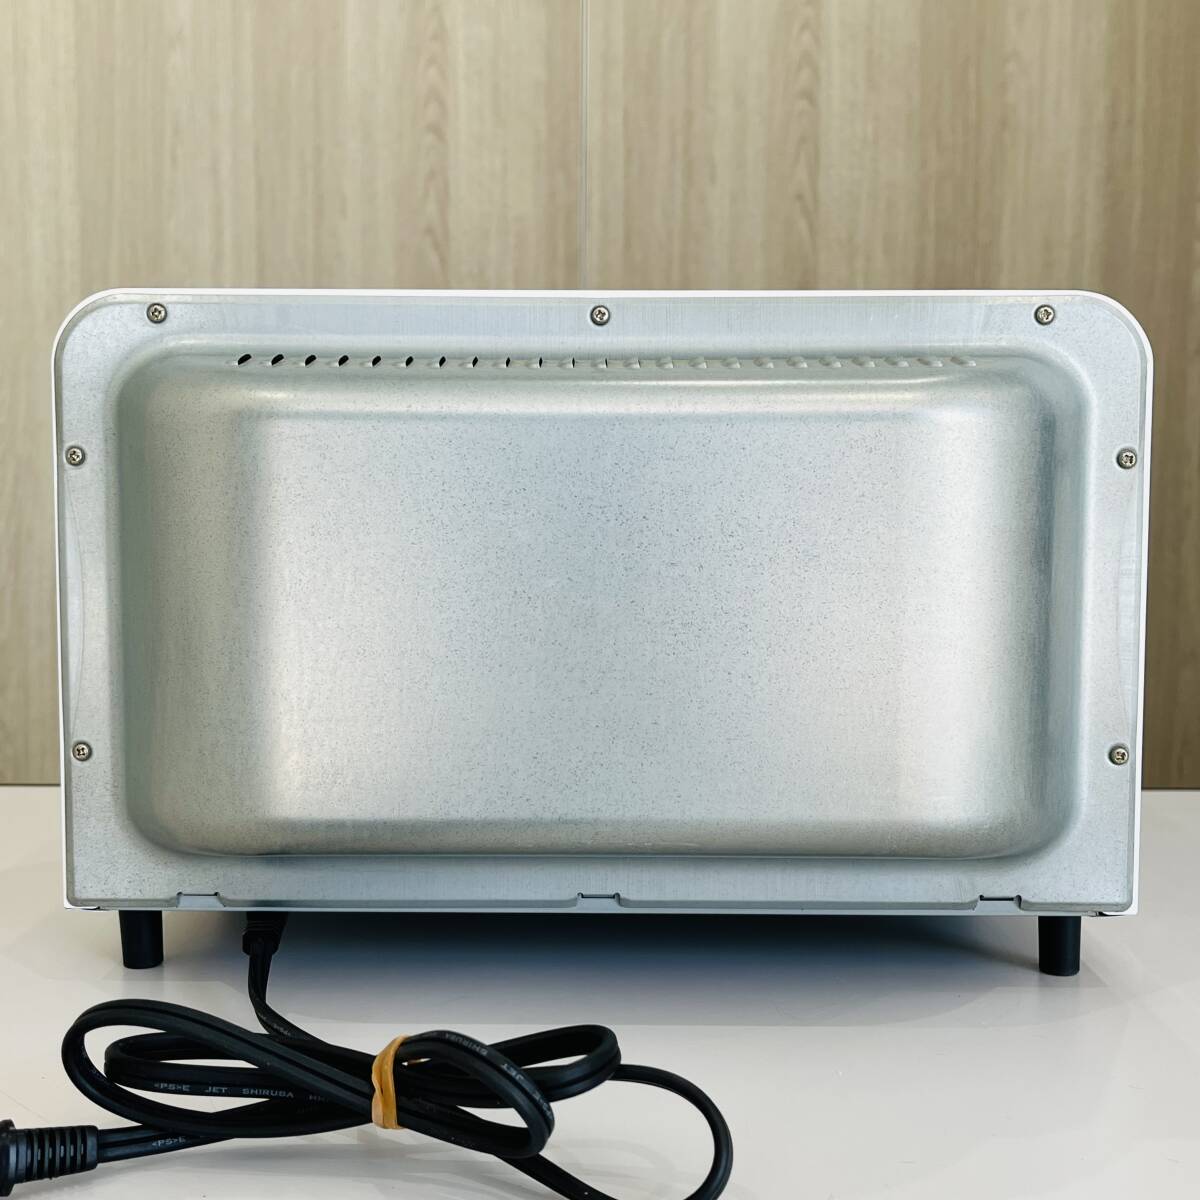 NA4938 動作品 コイズミ オーブントースター KOS-1200 2011年製 家電 オーブン トースター 調理家電 天板付属 引っ越し 新生活 検K_画像3